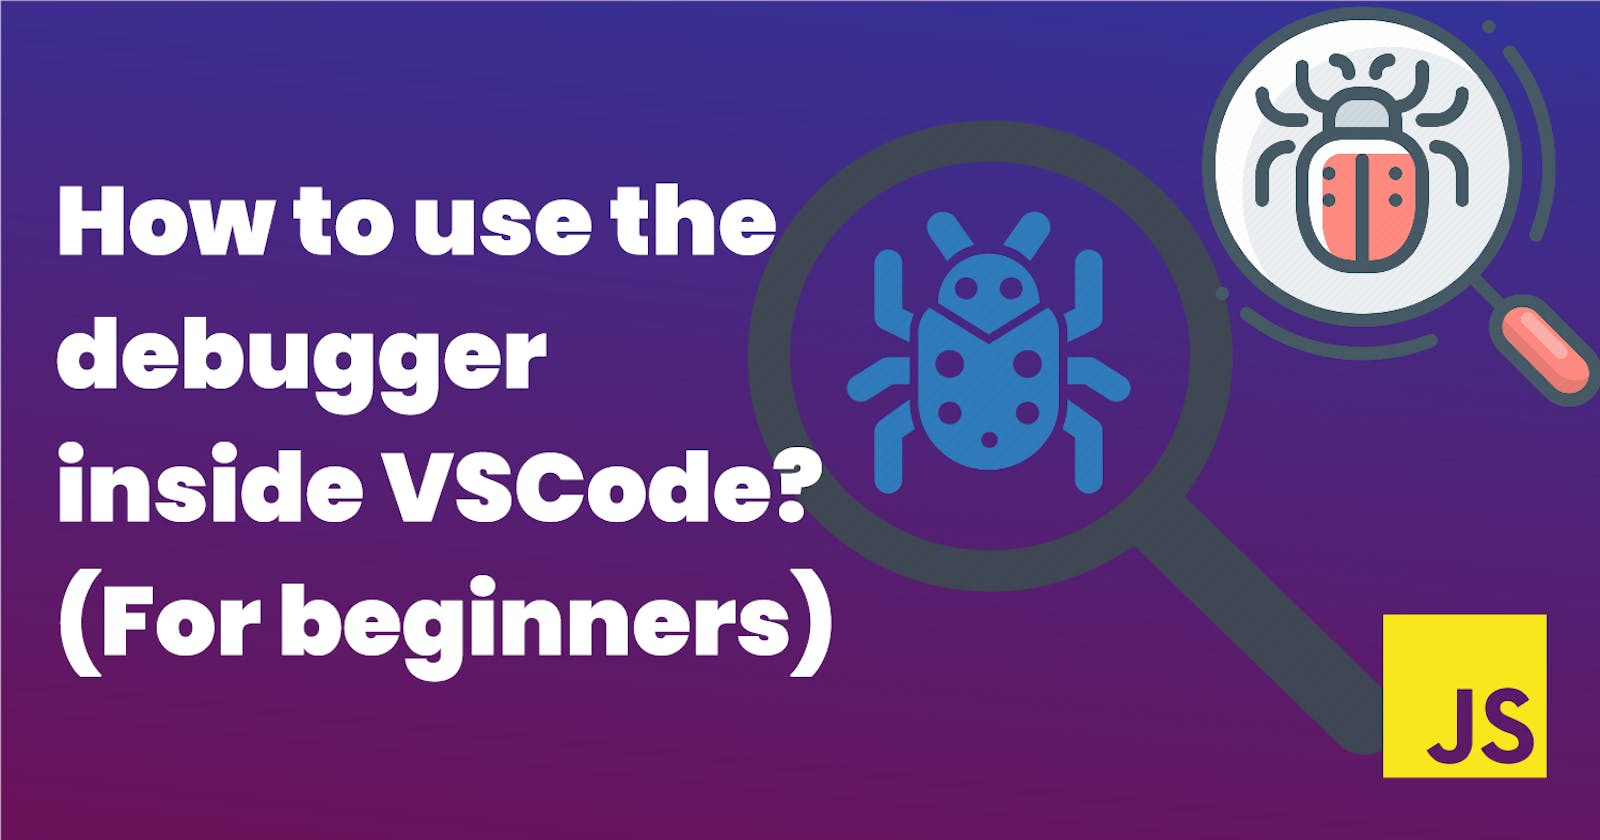 How to use the debugger inside VSCode 
(For beginners)